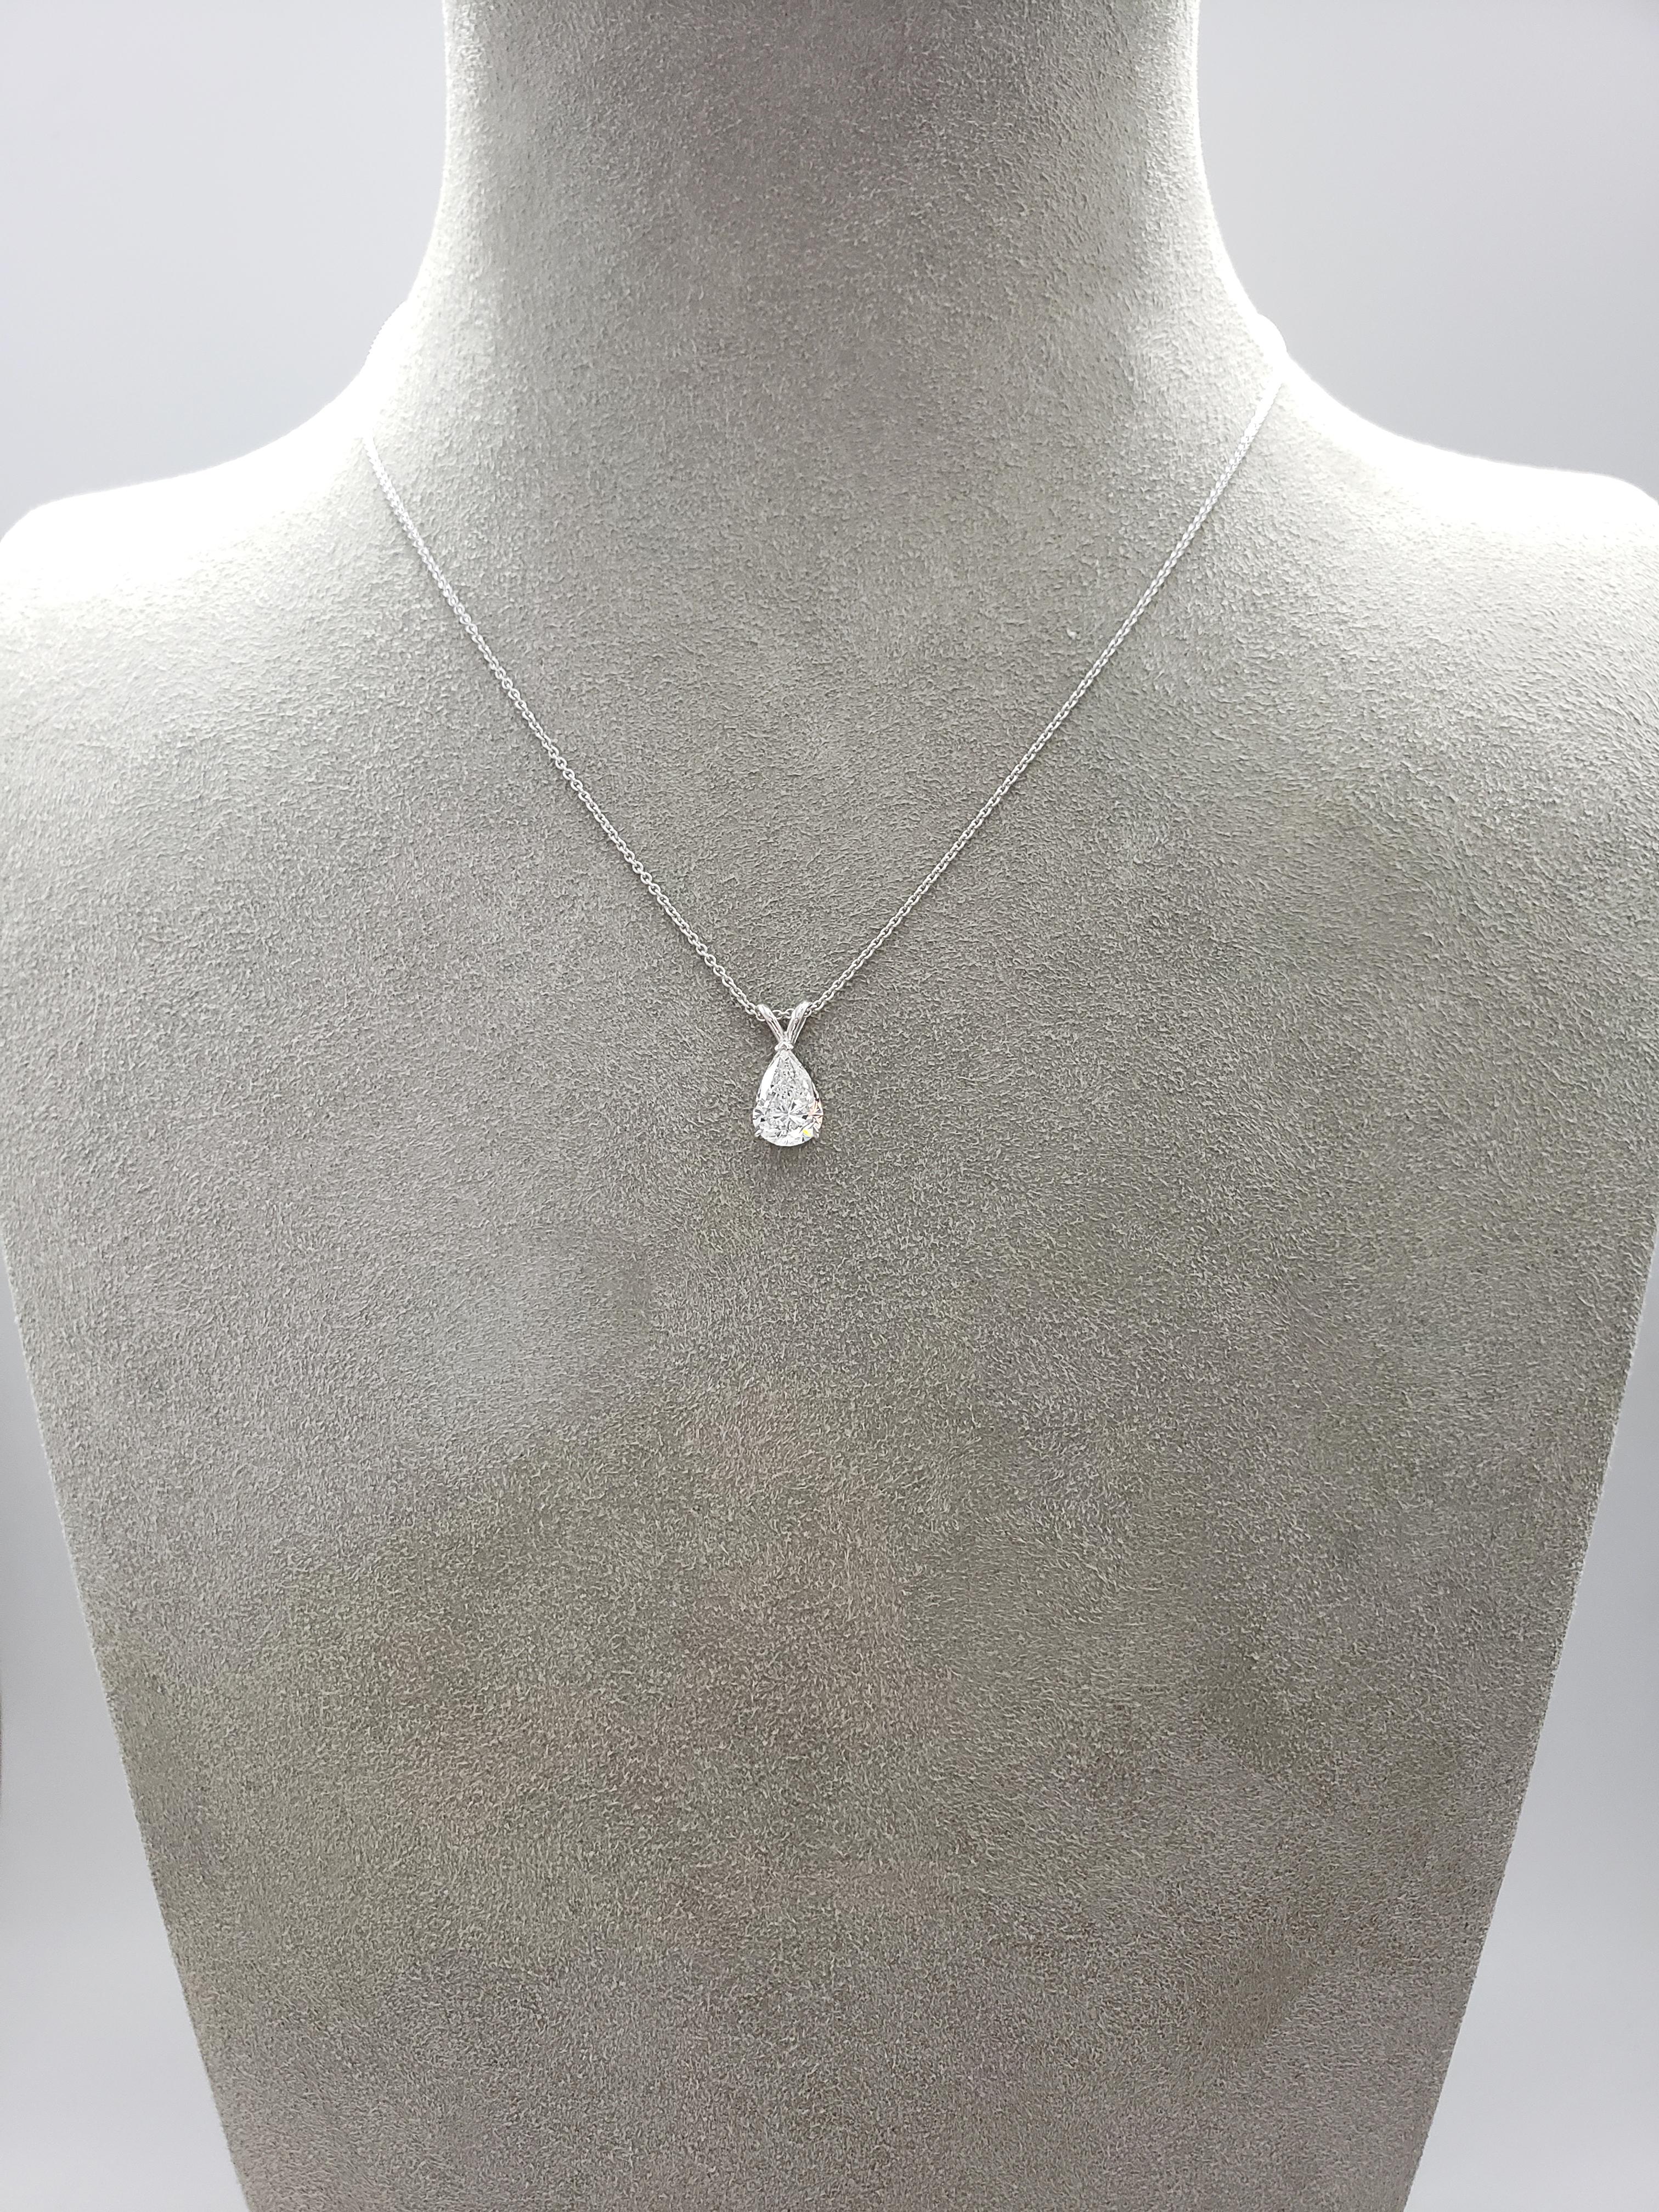 Contemporary 1.64 Carat Pear Shape Diamond Solitaire Pendant Necklace